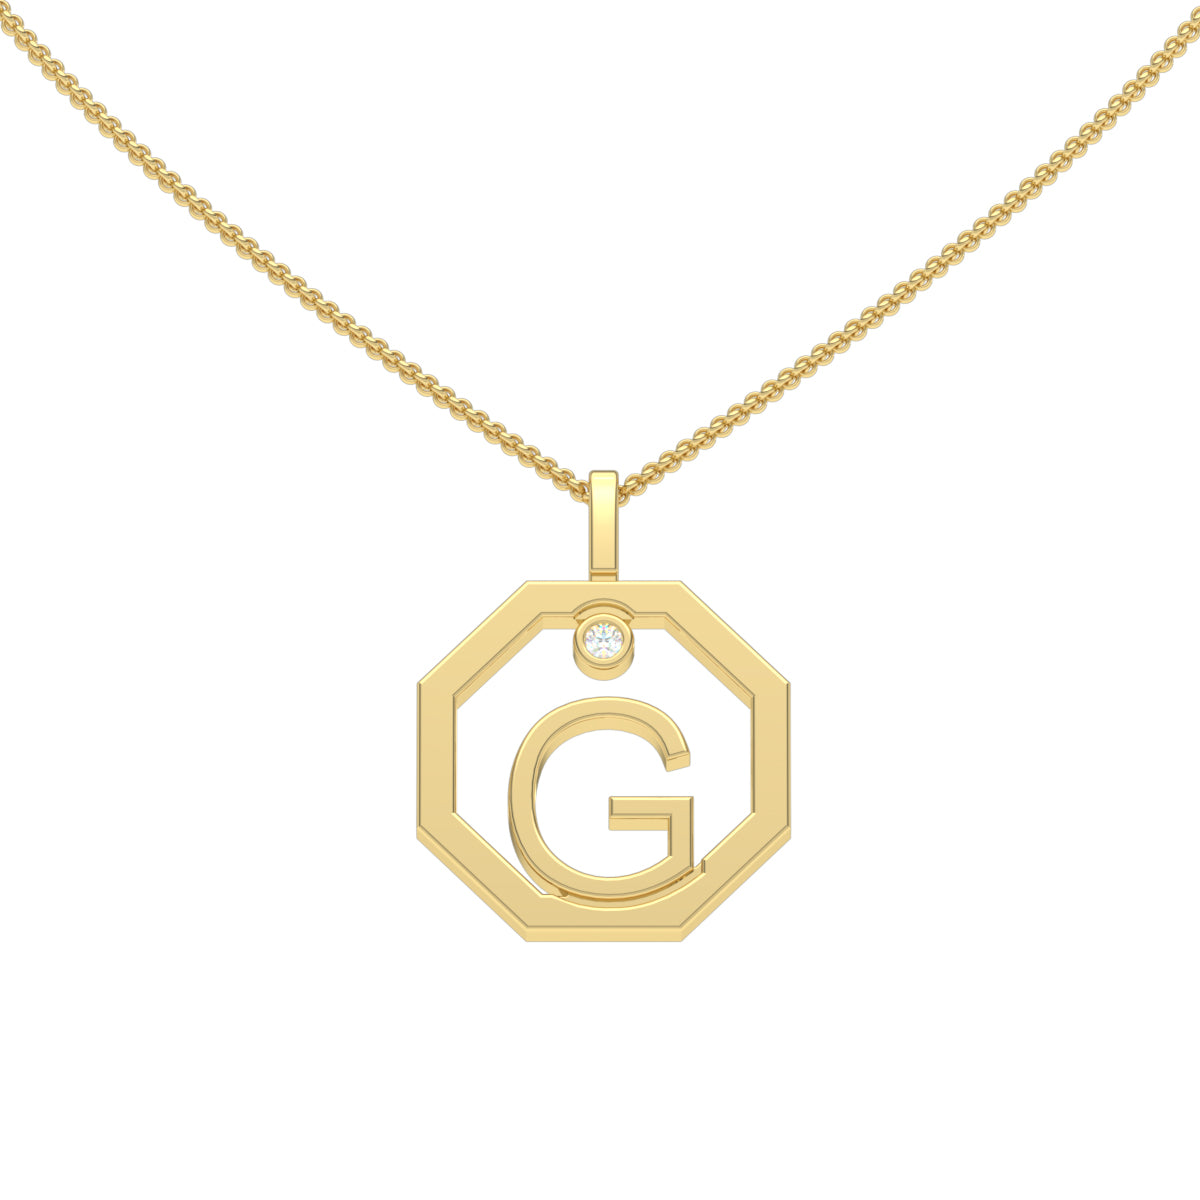 Personalised-Initial-G-diamond-yellow-gold-pendant-Lizunova-Fine-Jewels-Sydney-NSW-Australia